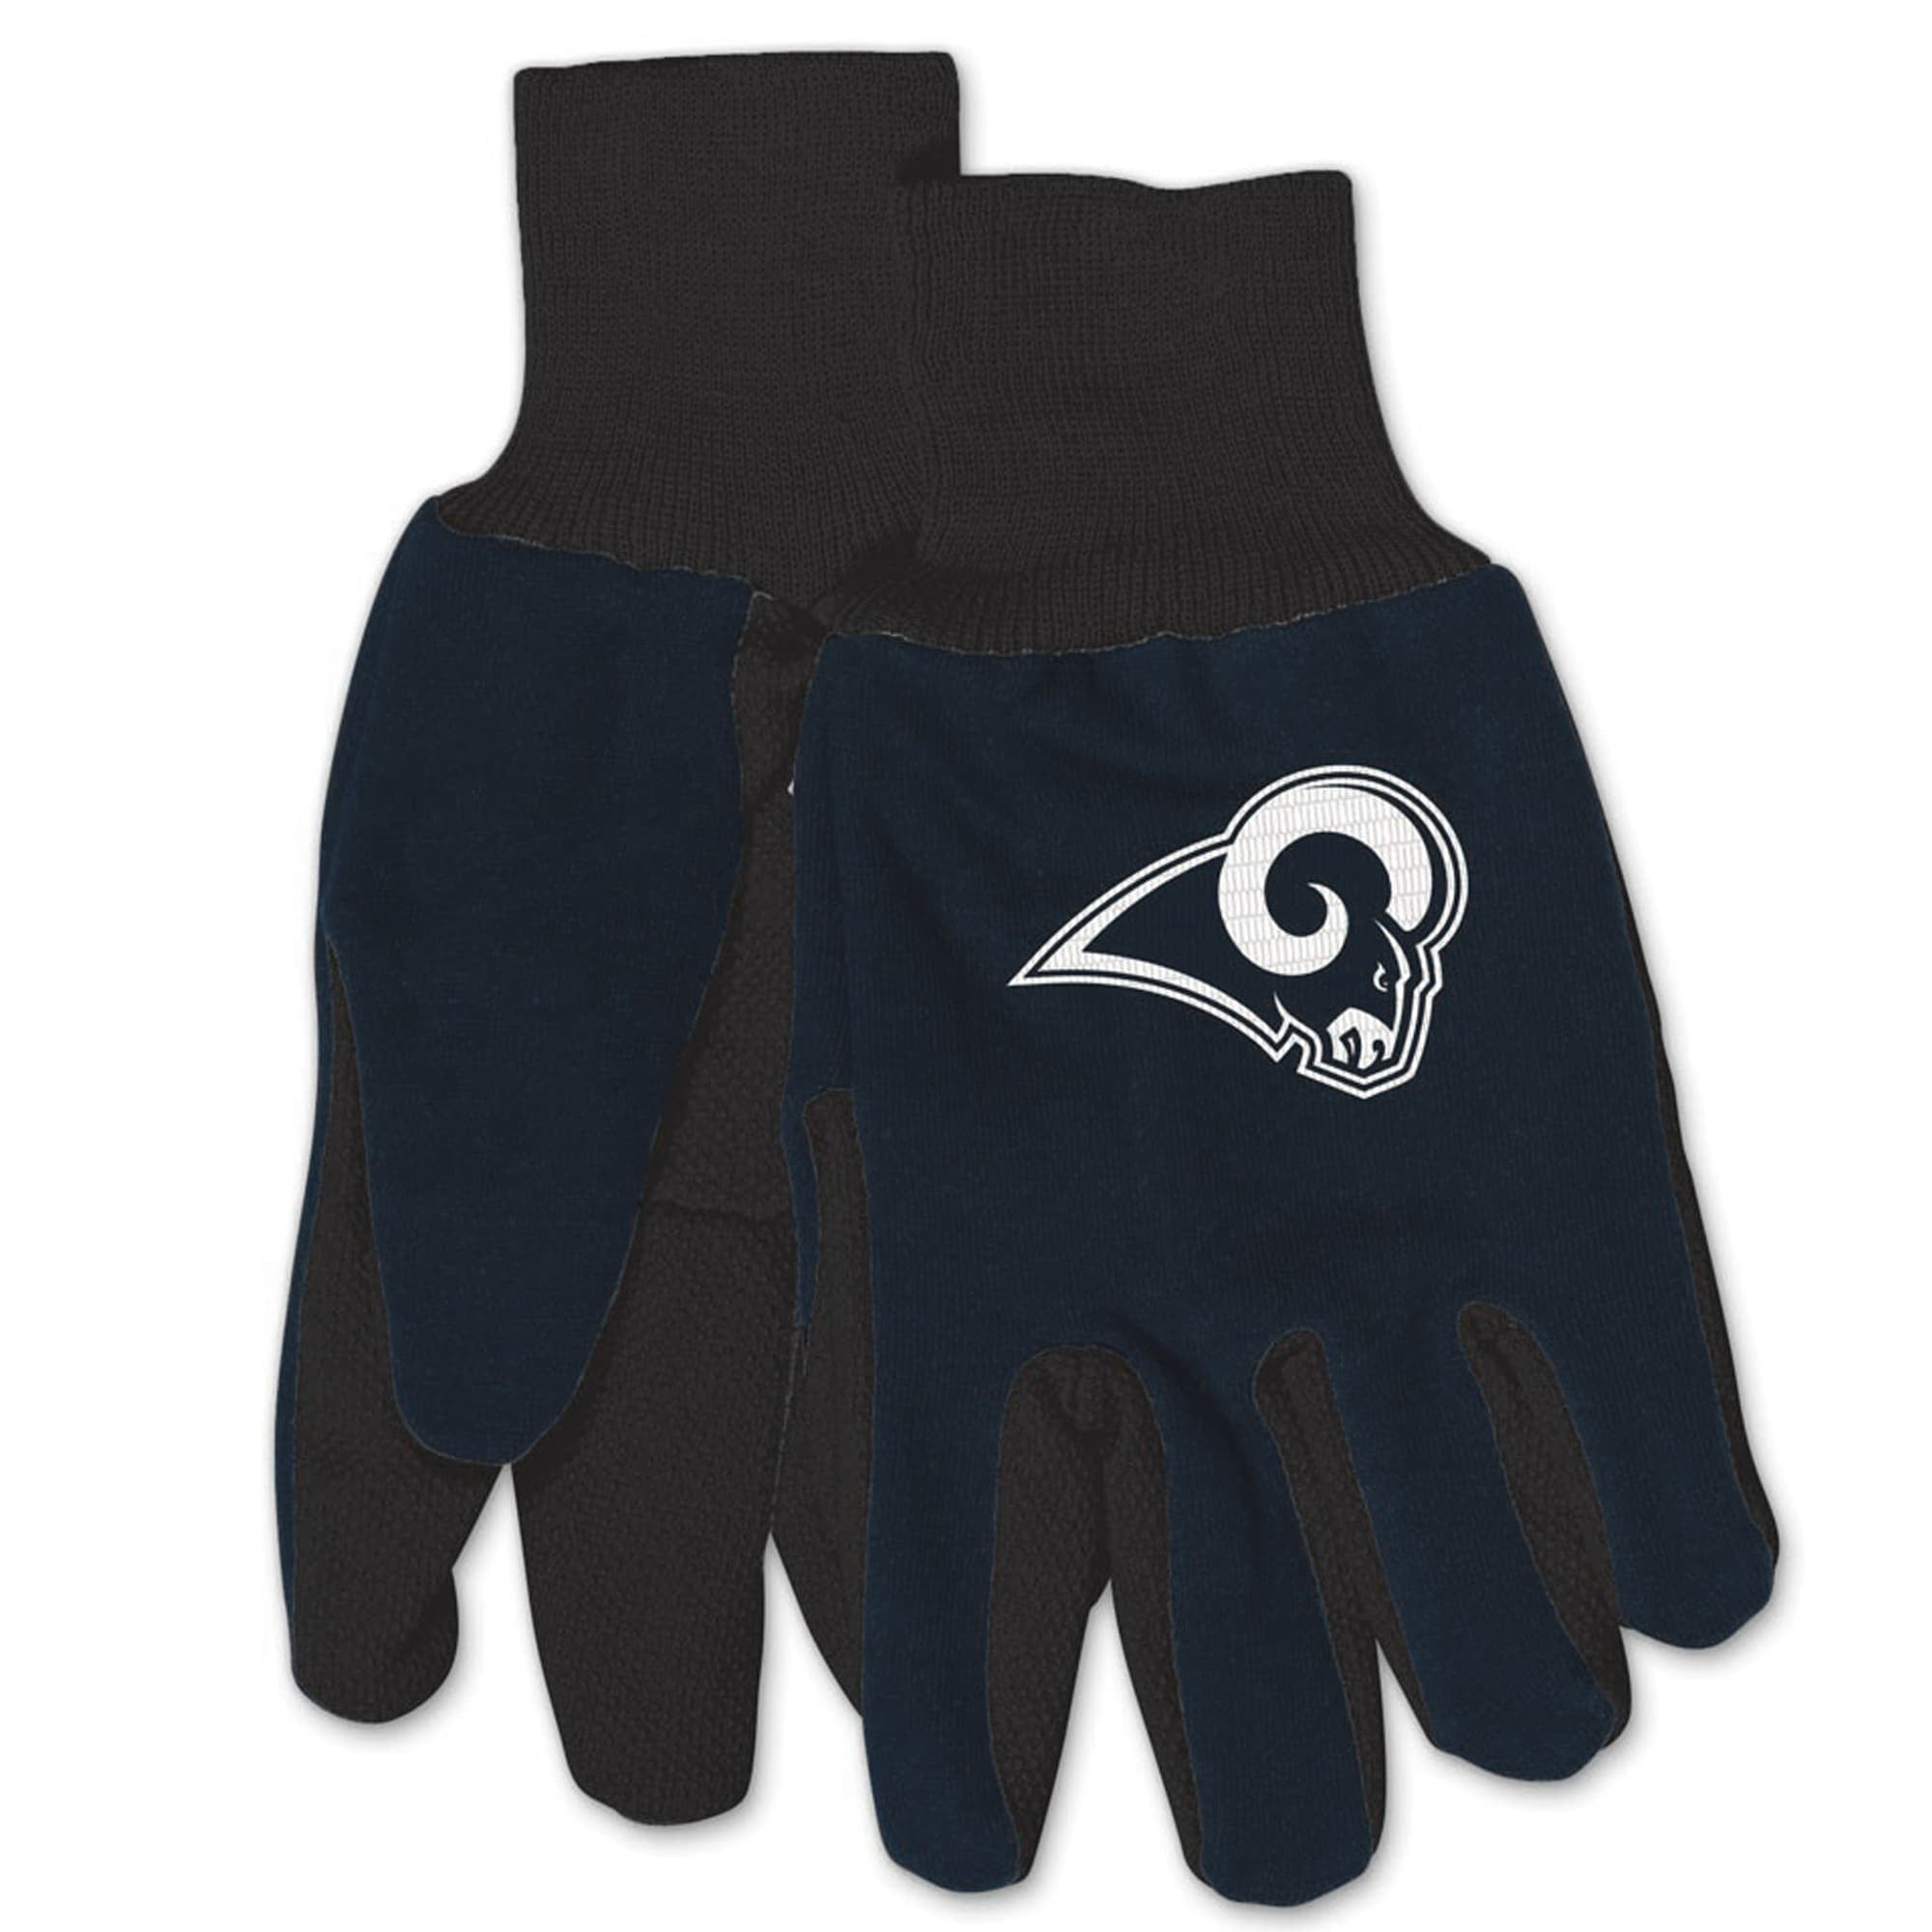 بجايم بنات Los Angeles Rams NFL Adult Winter Warm Gloves Black شامبو تريسمي الاحمر